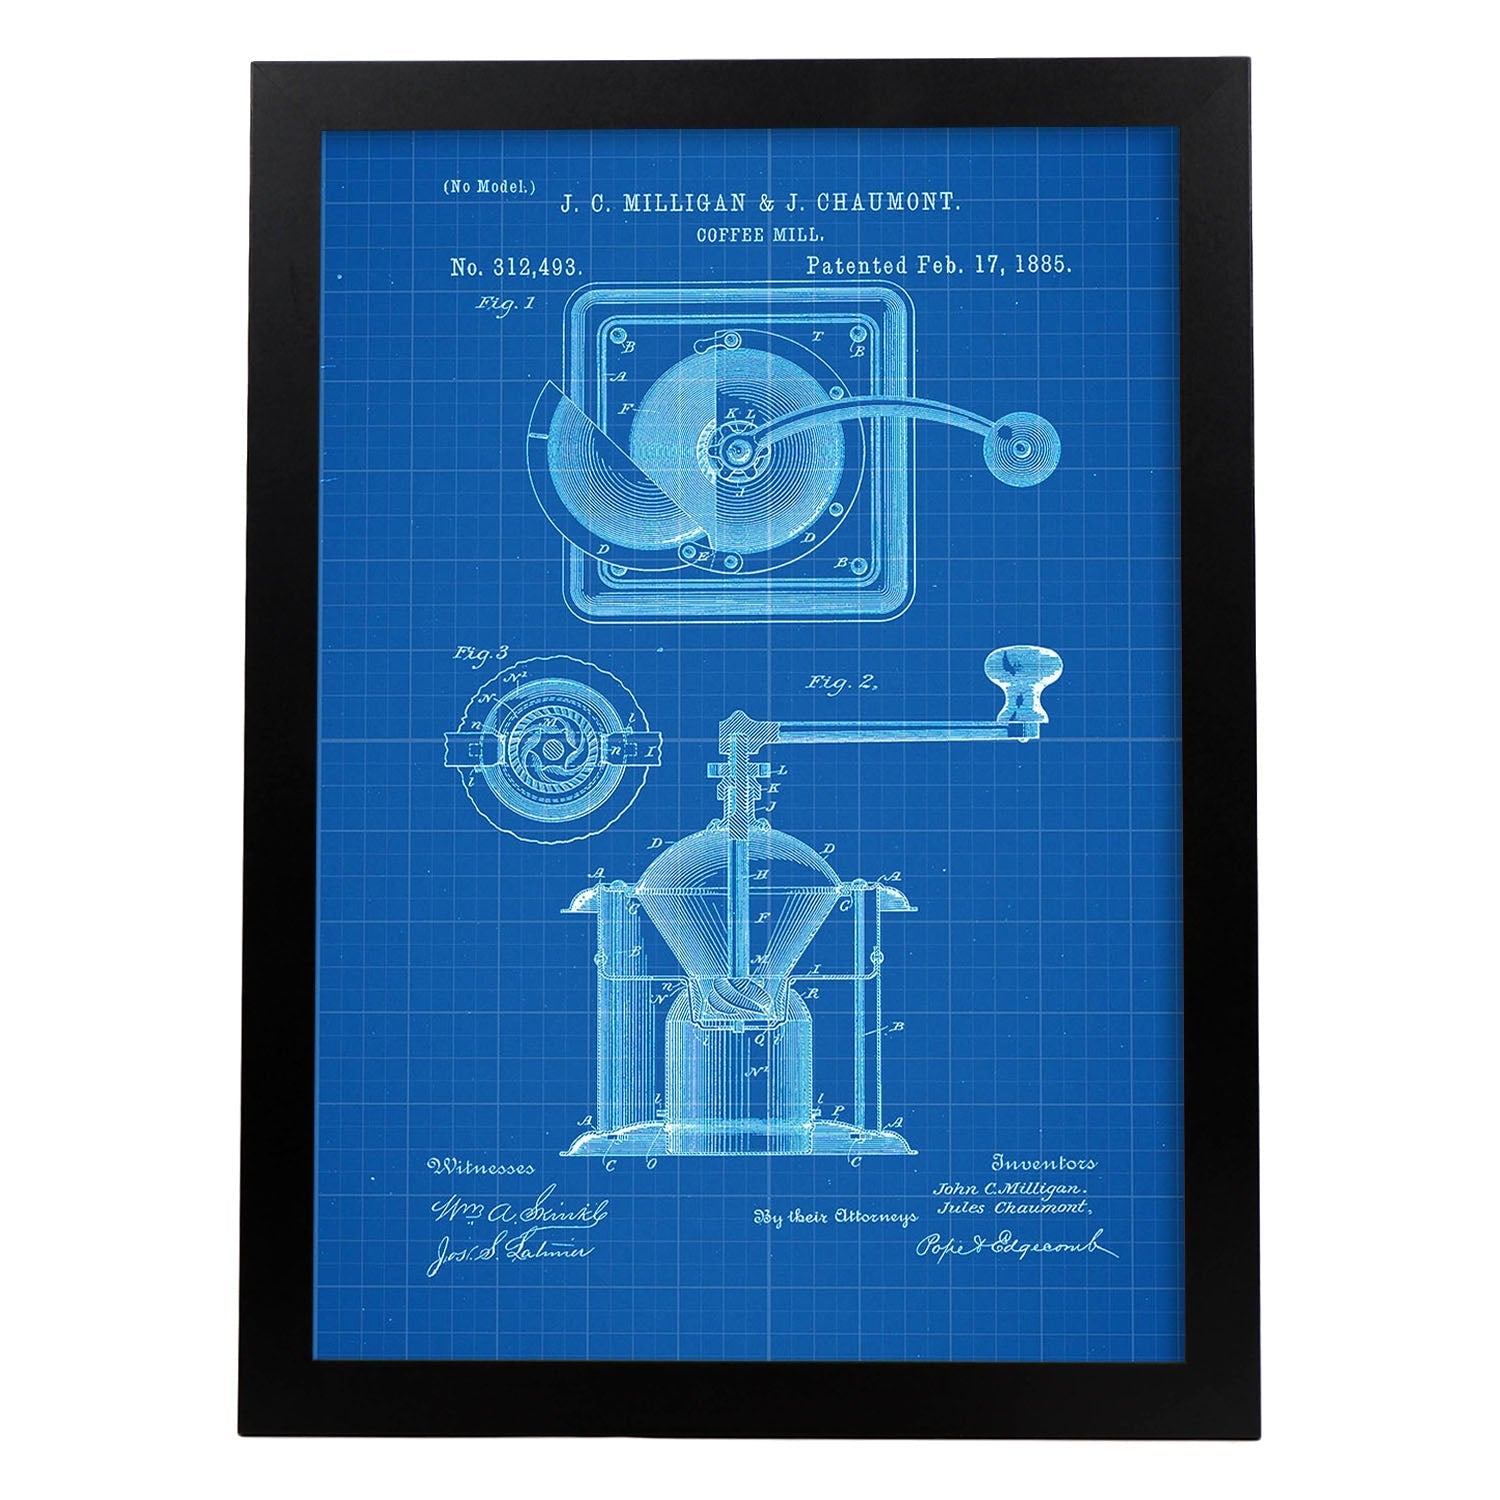 Poster con patente de Molinillo de café. Lámina con diseño de patente antigua-Artwork-Nacnic-A4-Marco Negro-Nacnic Estudio SL